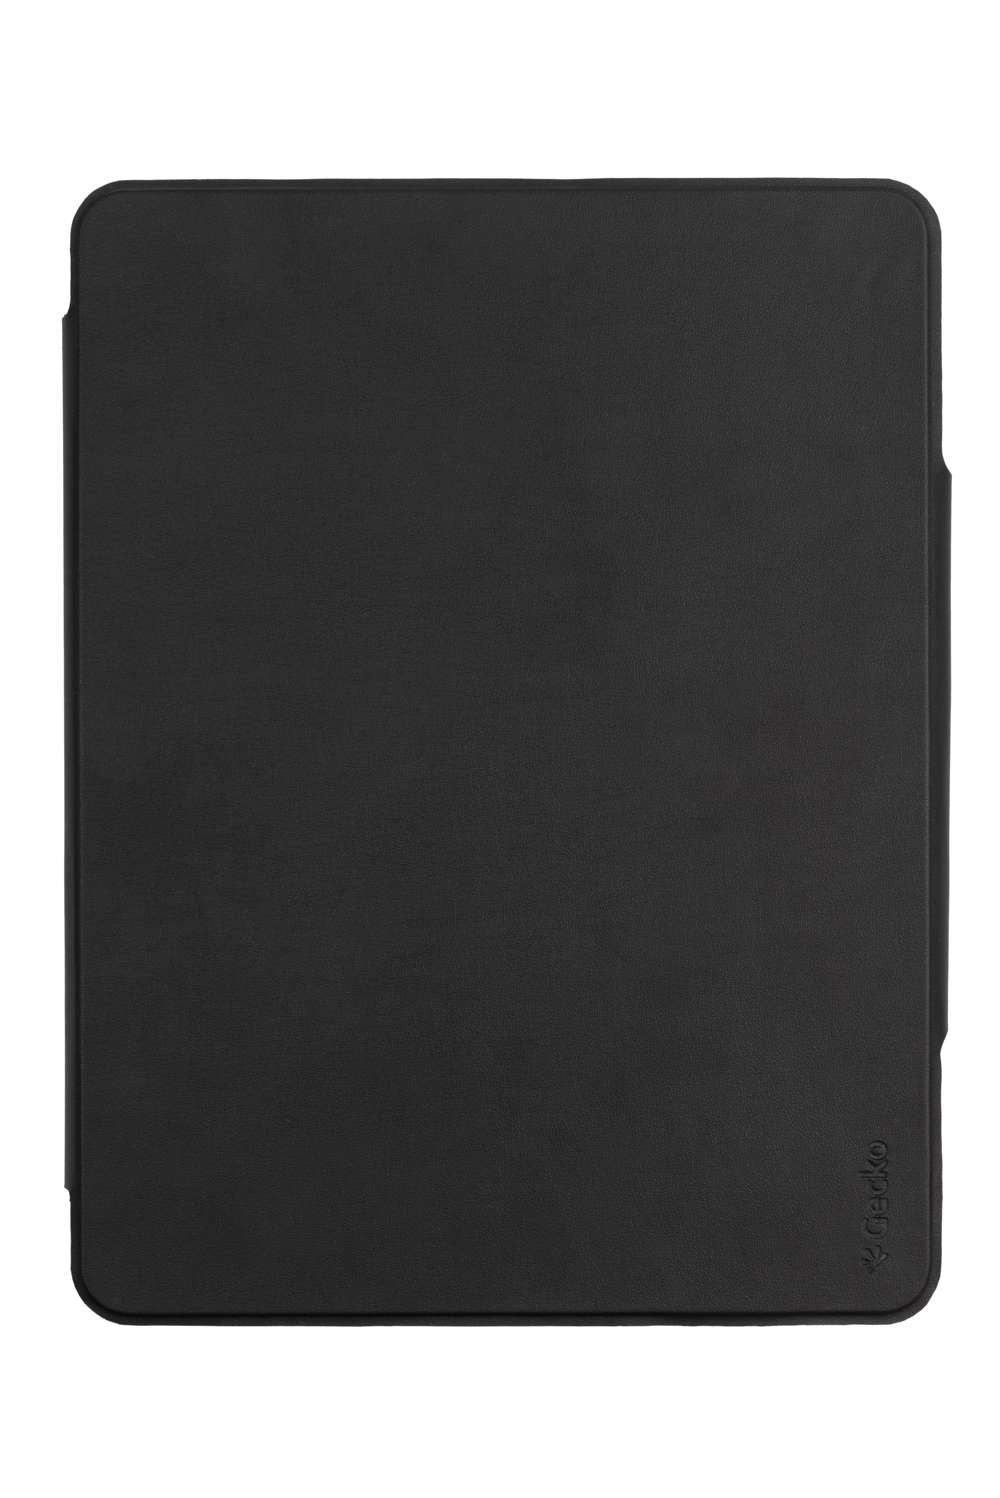 Bluetooth tablet keyboard case - Apple iPad Pro 12.9 inch (2020) - Black